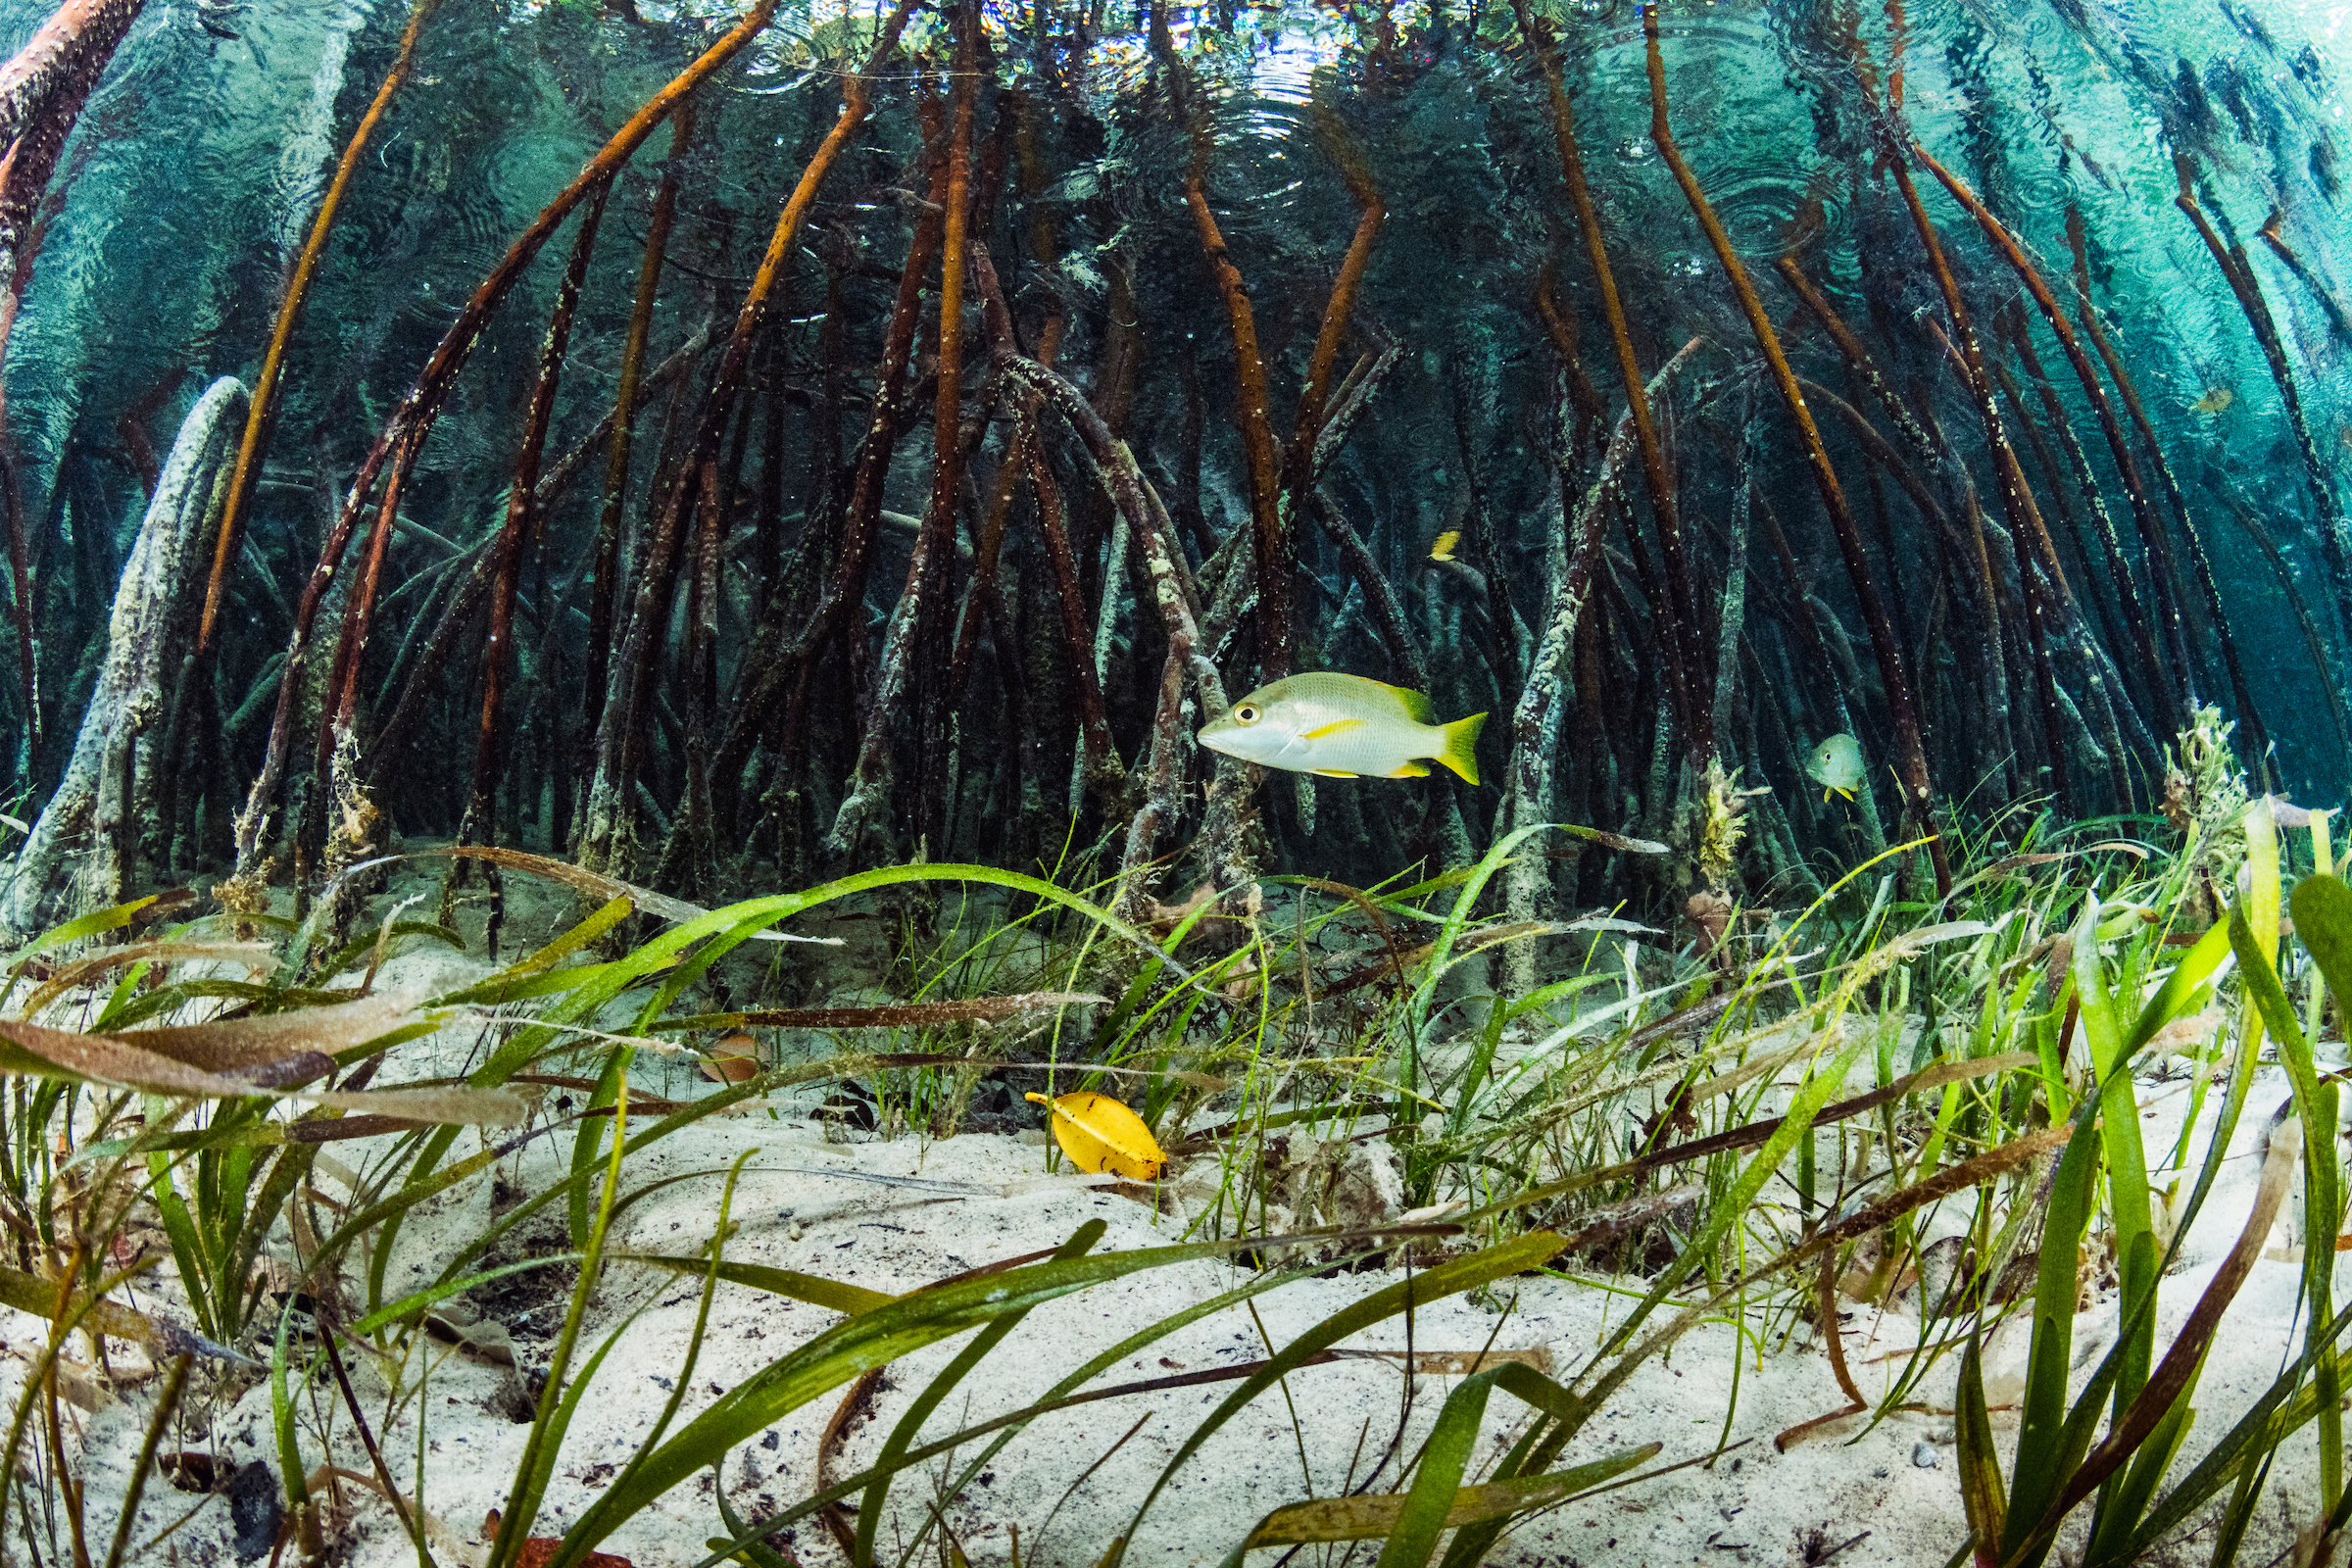 Schoolmaster snapper (Lutjanus apodus) in red mangrove(Rhizophora mangle) and turtlegrass (thalassia testudinum) habitats. Image made on Eleuthera Island, Bahamas.